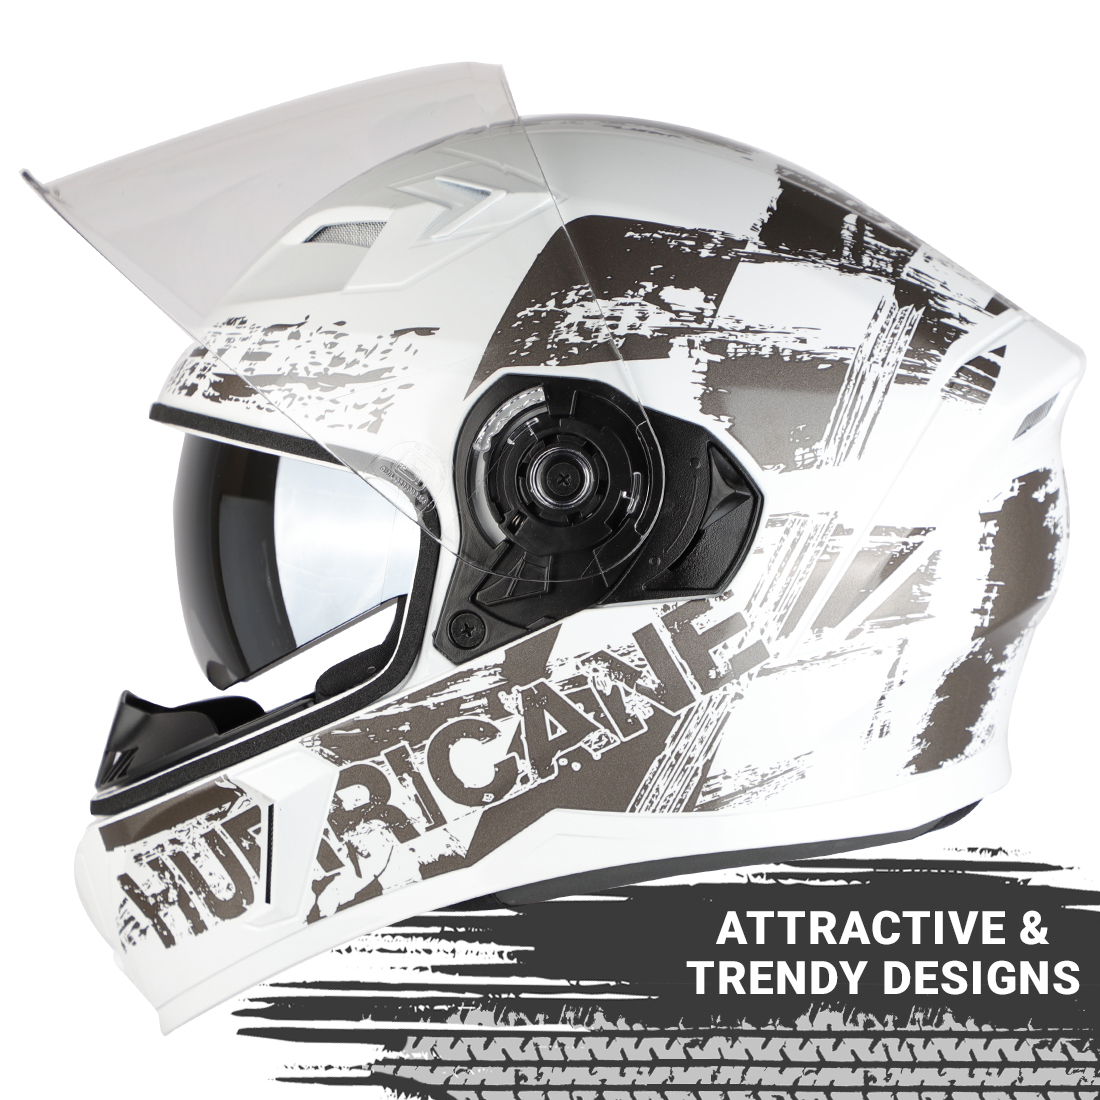 Steelbird SBA-21 Hurricane ISI Certified Full Face Graphic Helmet With Inner Sun Shield (Glossy White Grey)